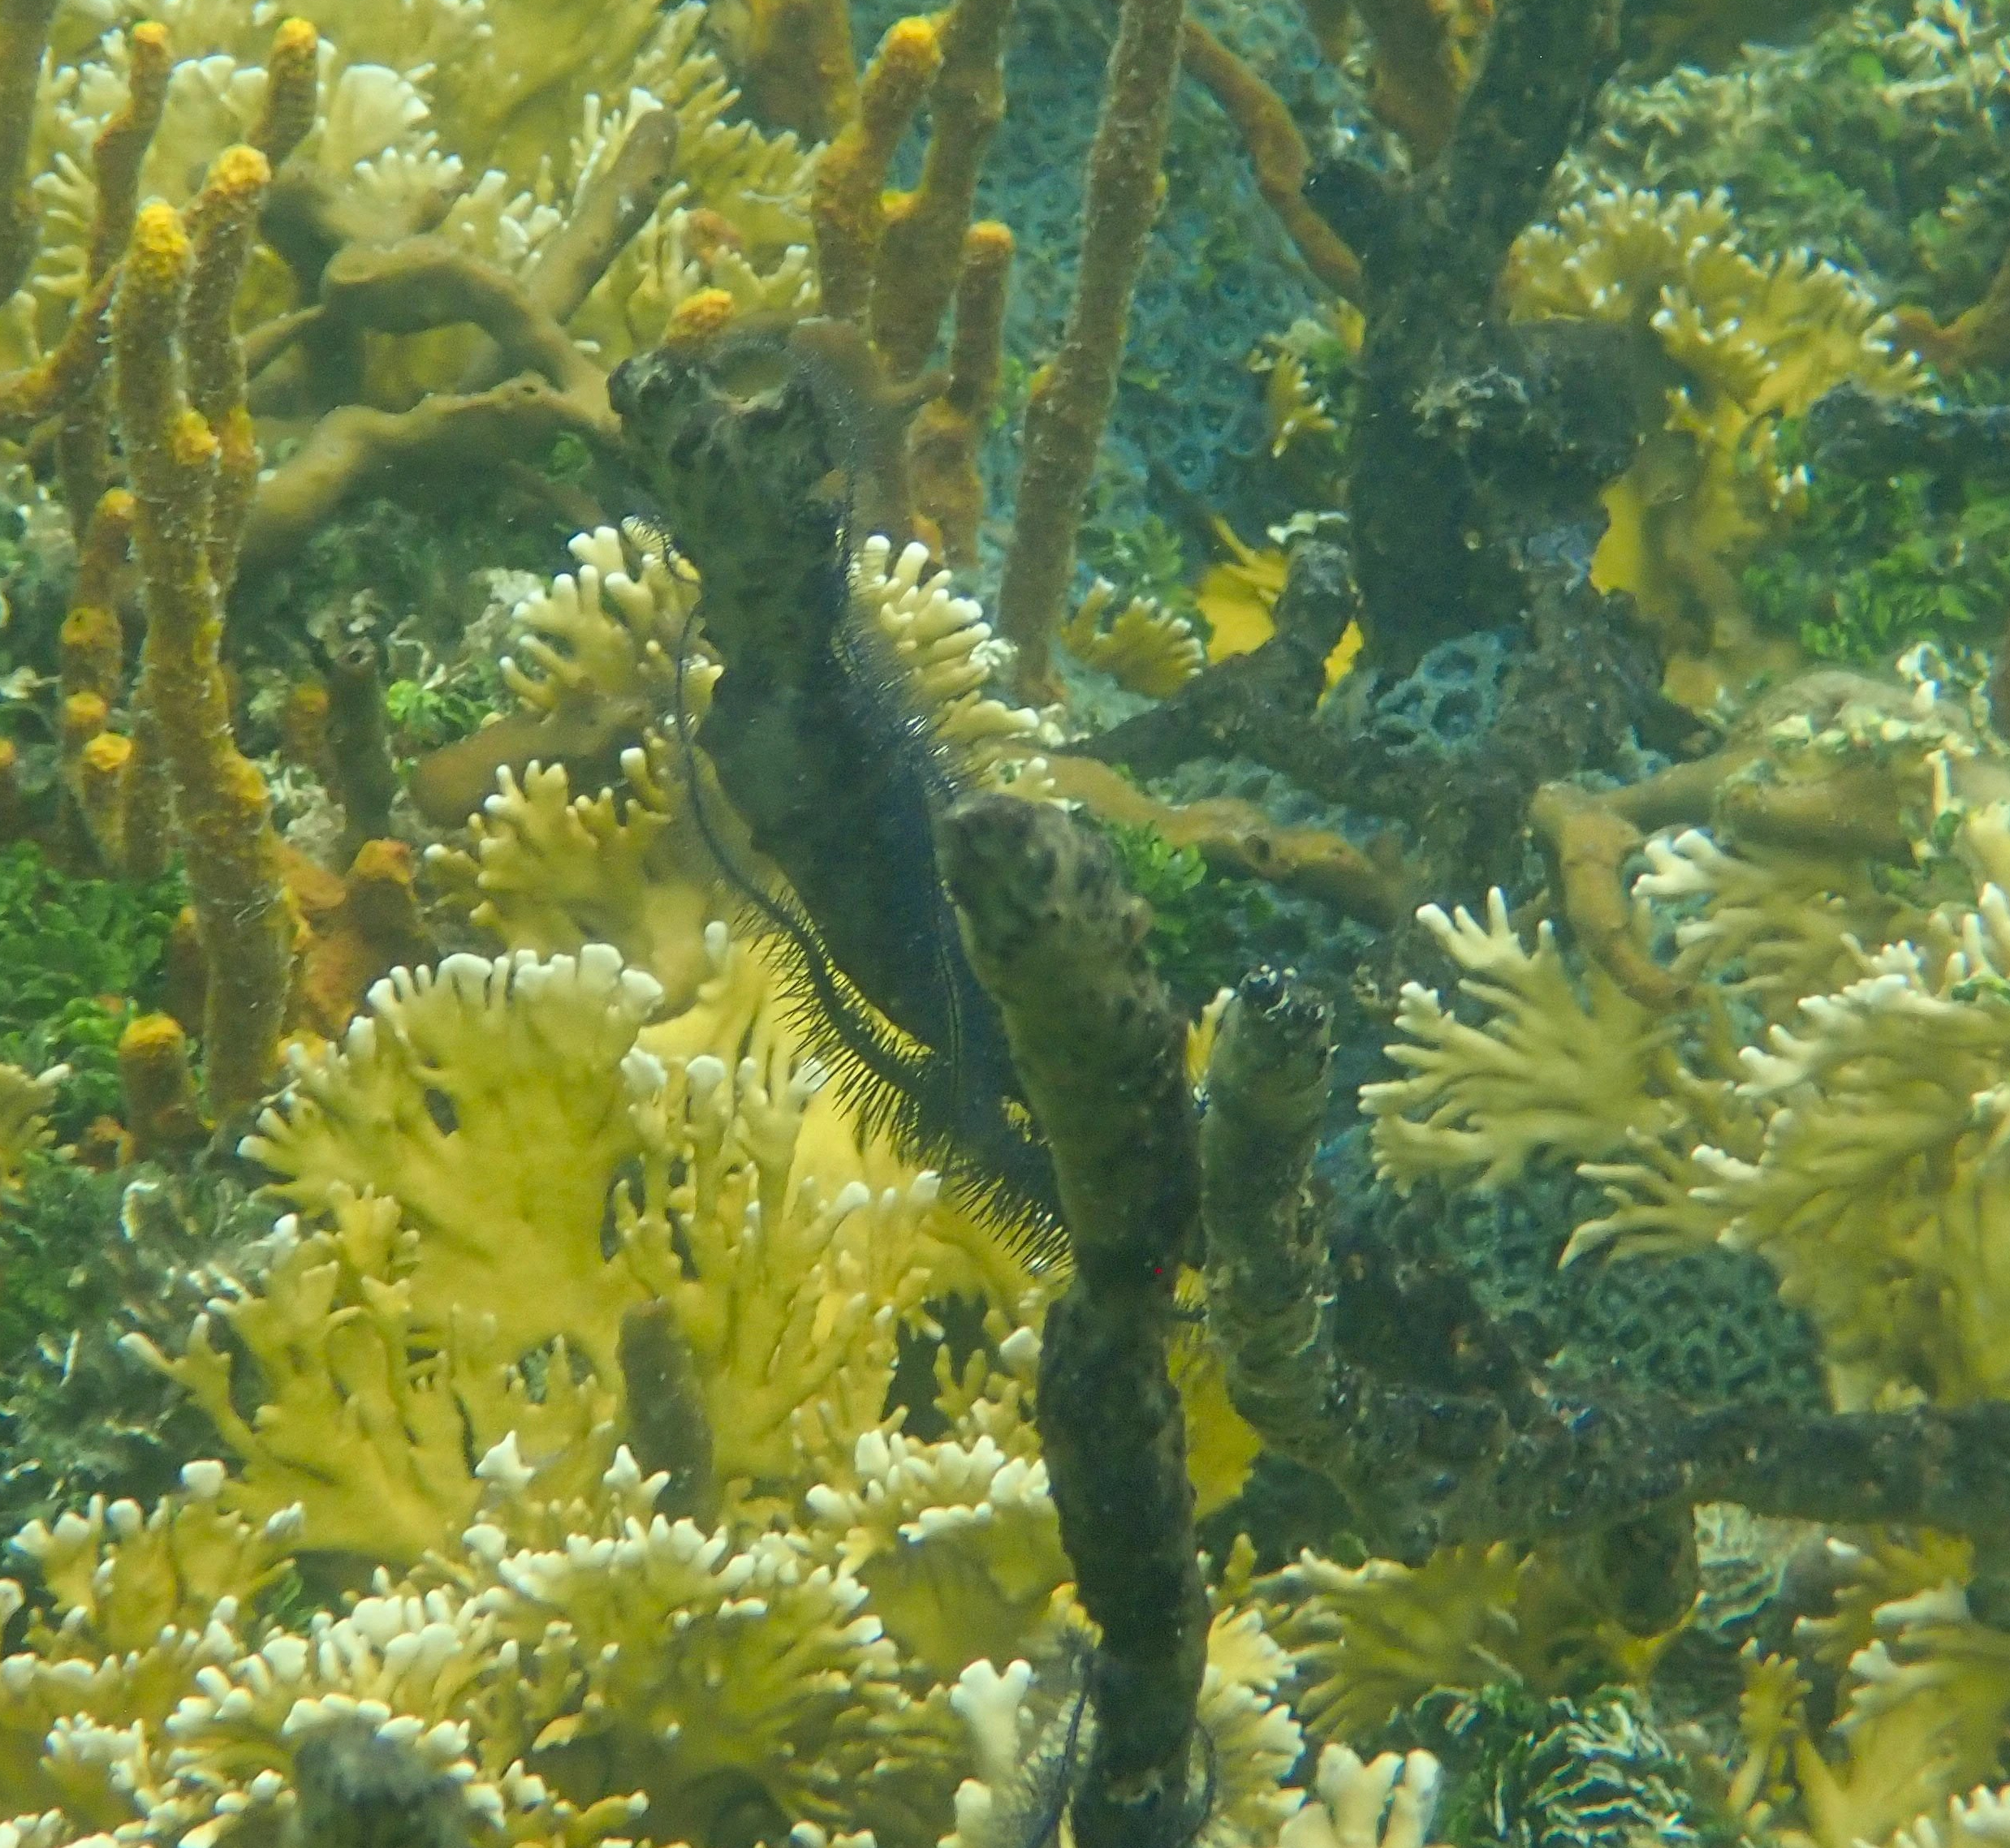 Coral community with brittle star at Bocas del Toros, Panama. (c) C Braungardt 2024